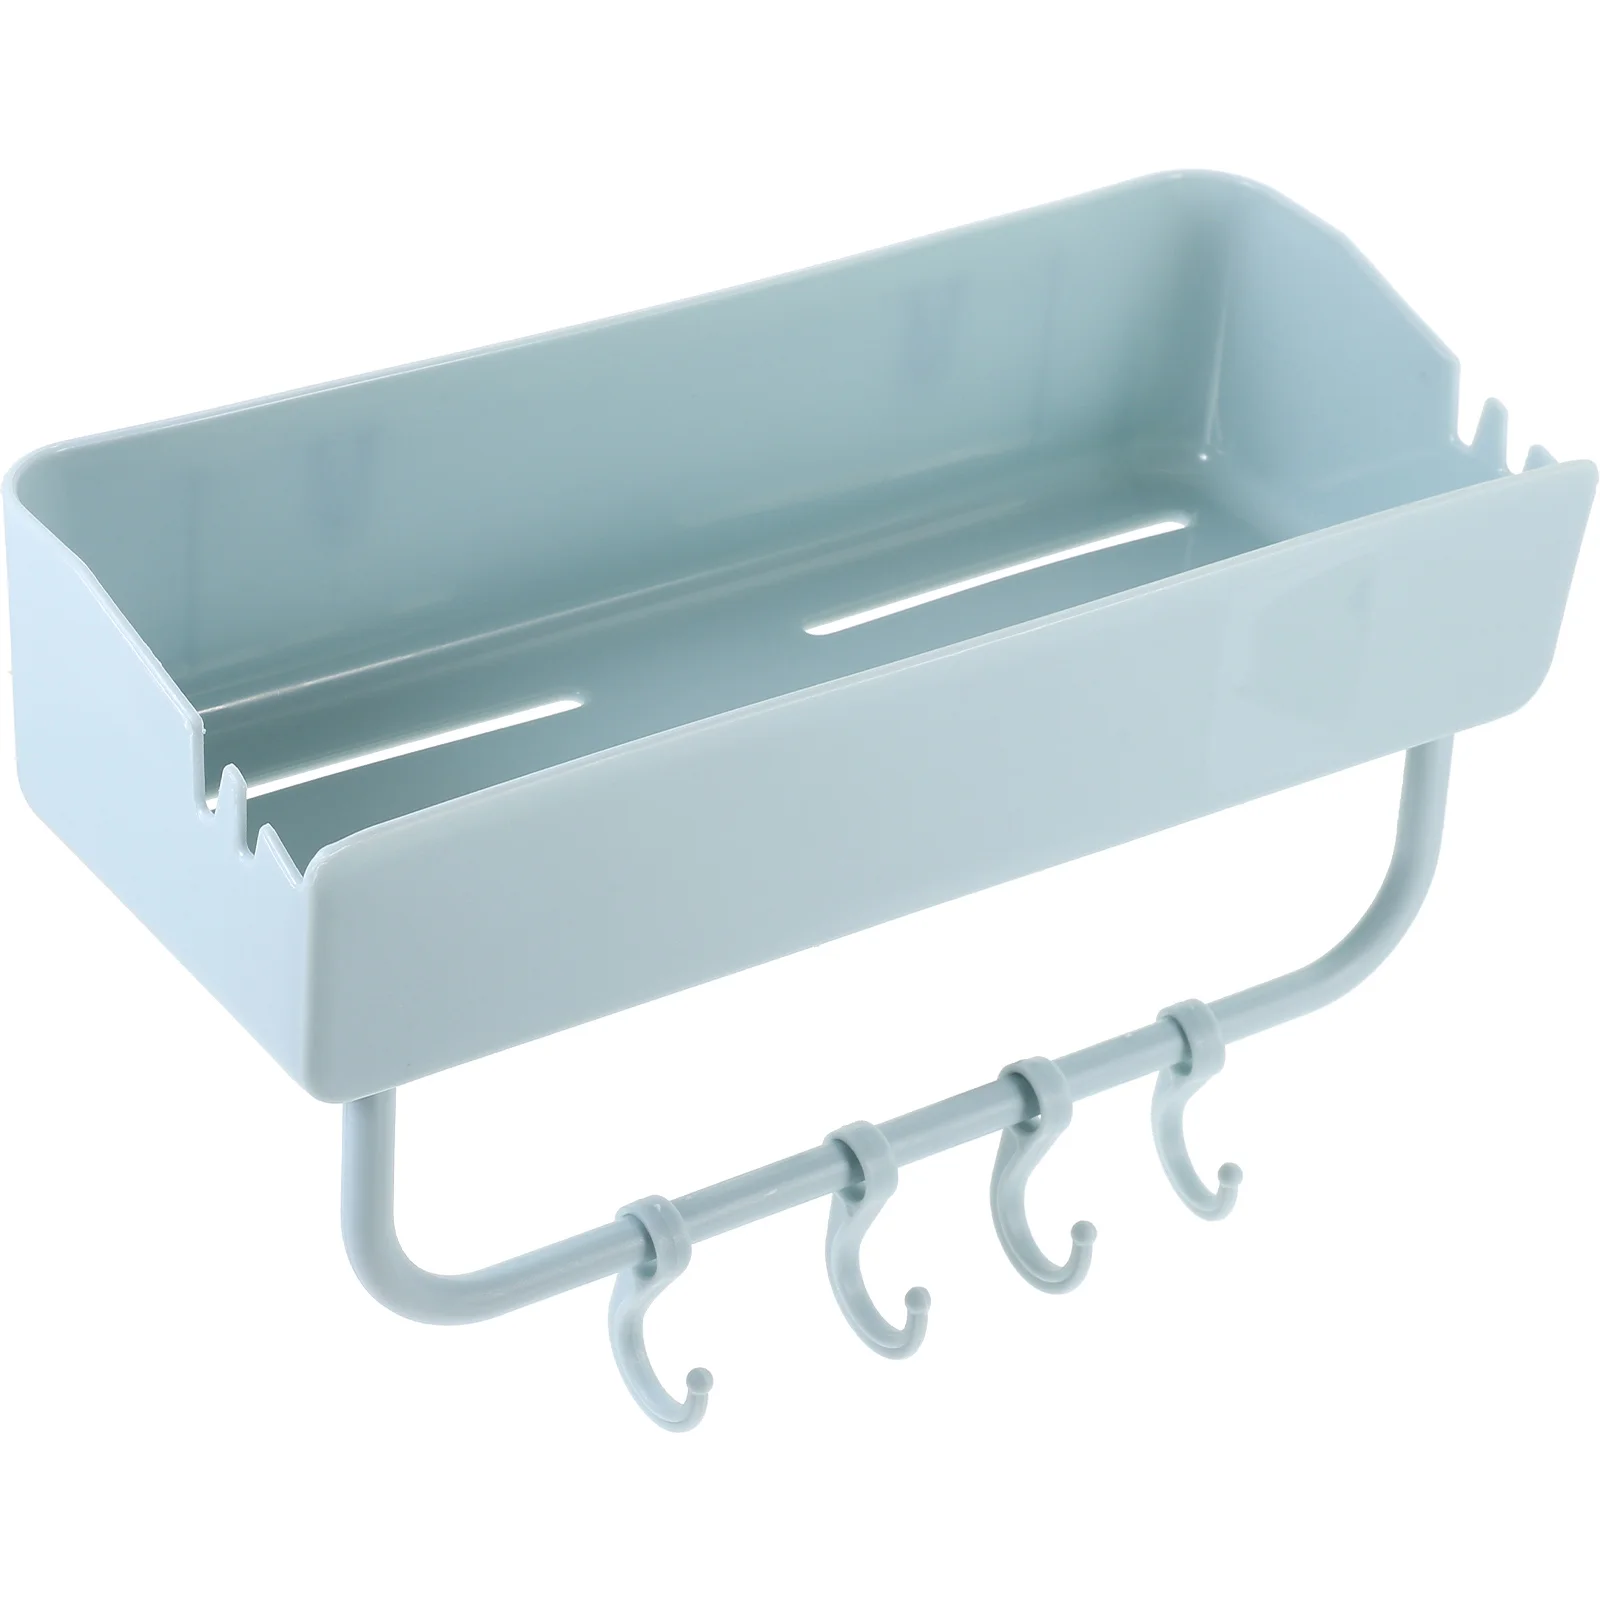 

Convenient Bathroom Shelf Shower Hook Organizer Towel Holder Rack Plastic No Drill Wall Mounted Draining Basket Rails